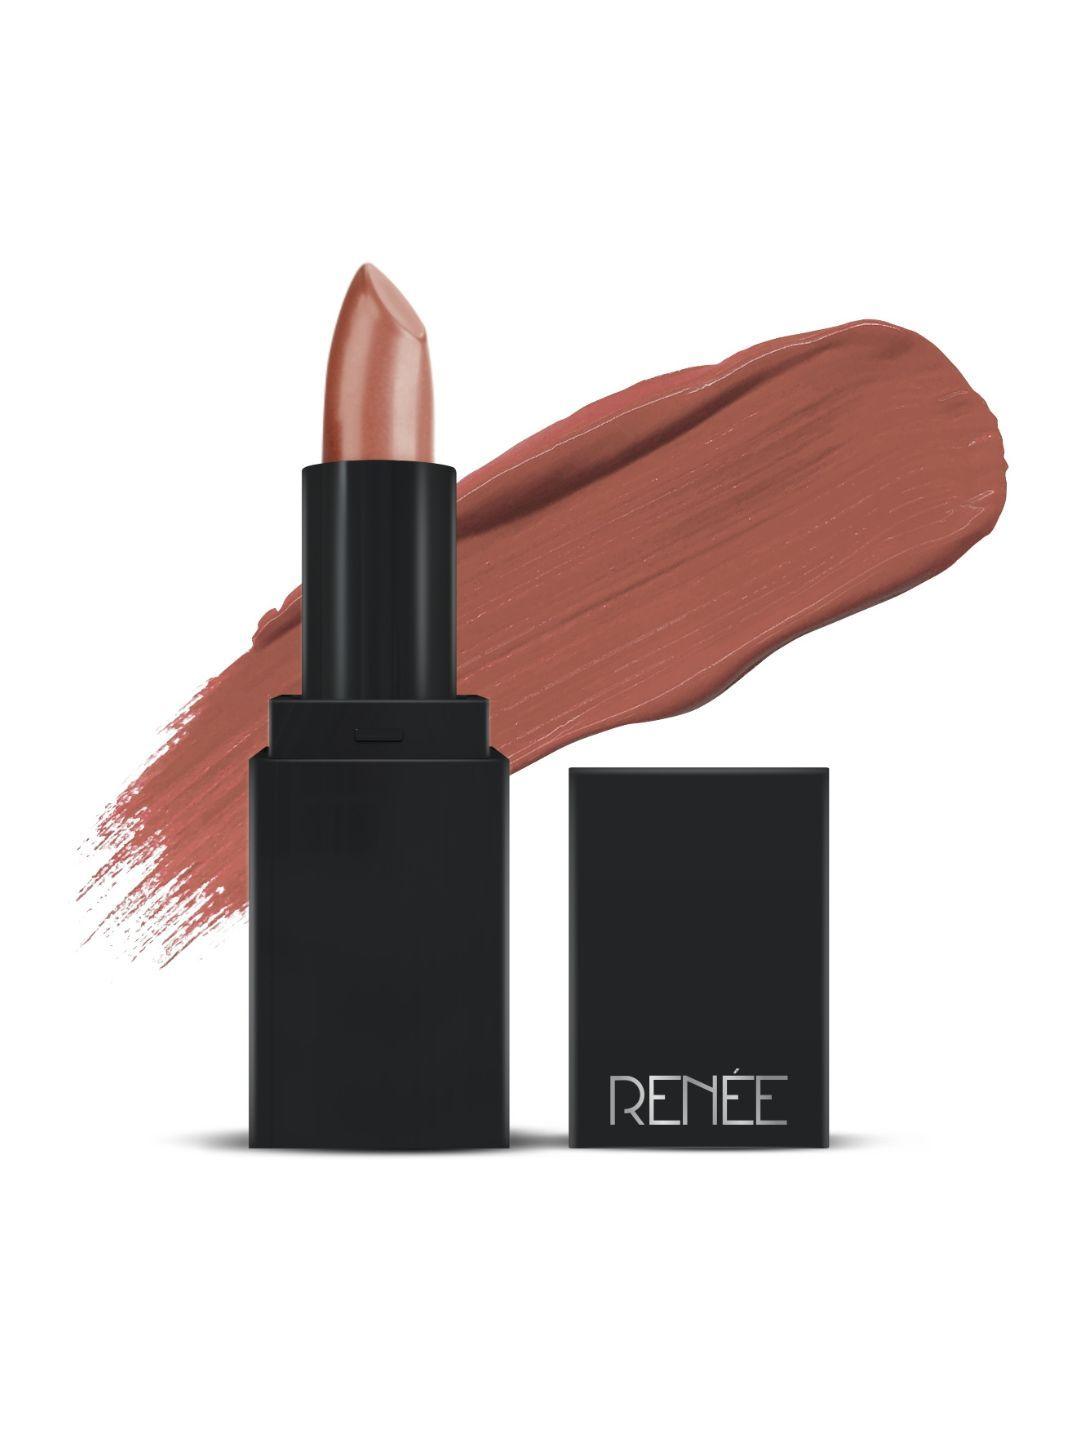 renee creme mini lipstick  1.65g - mood for nude